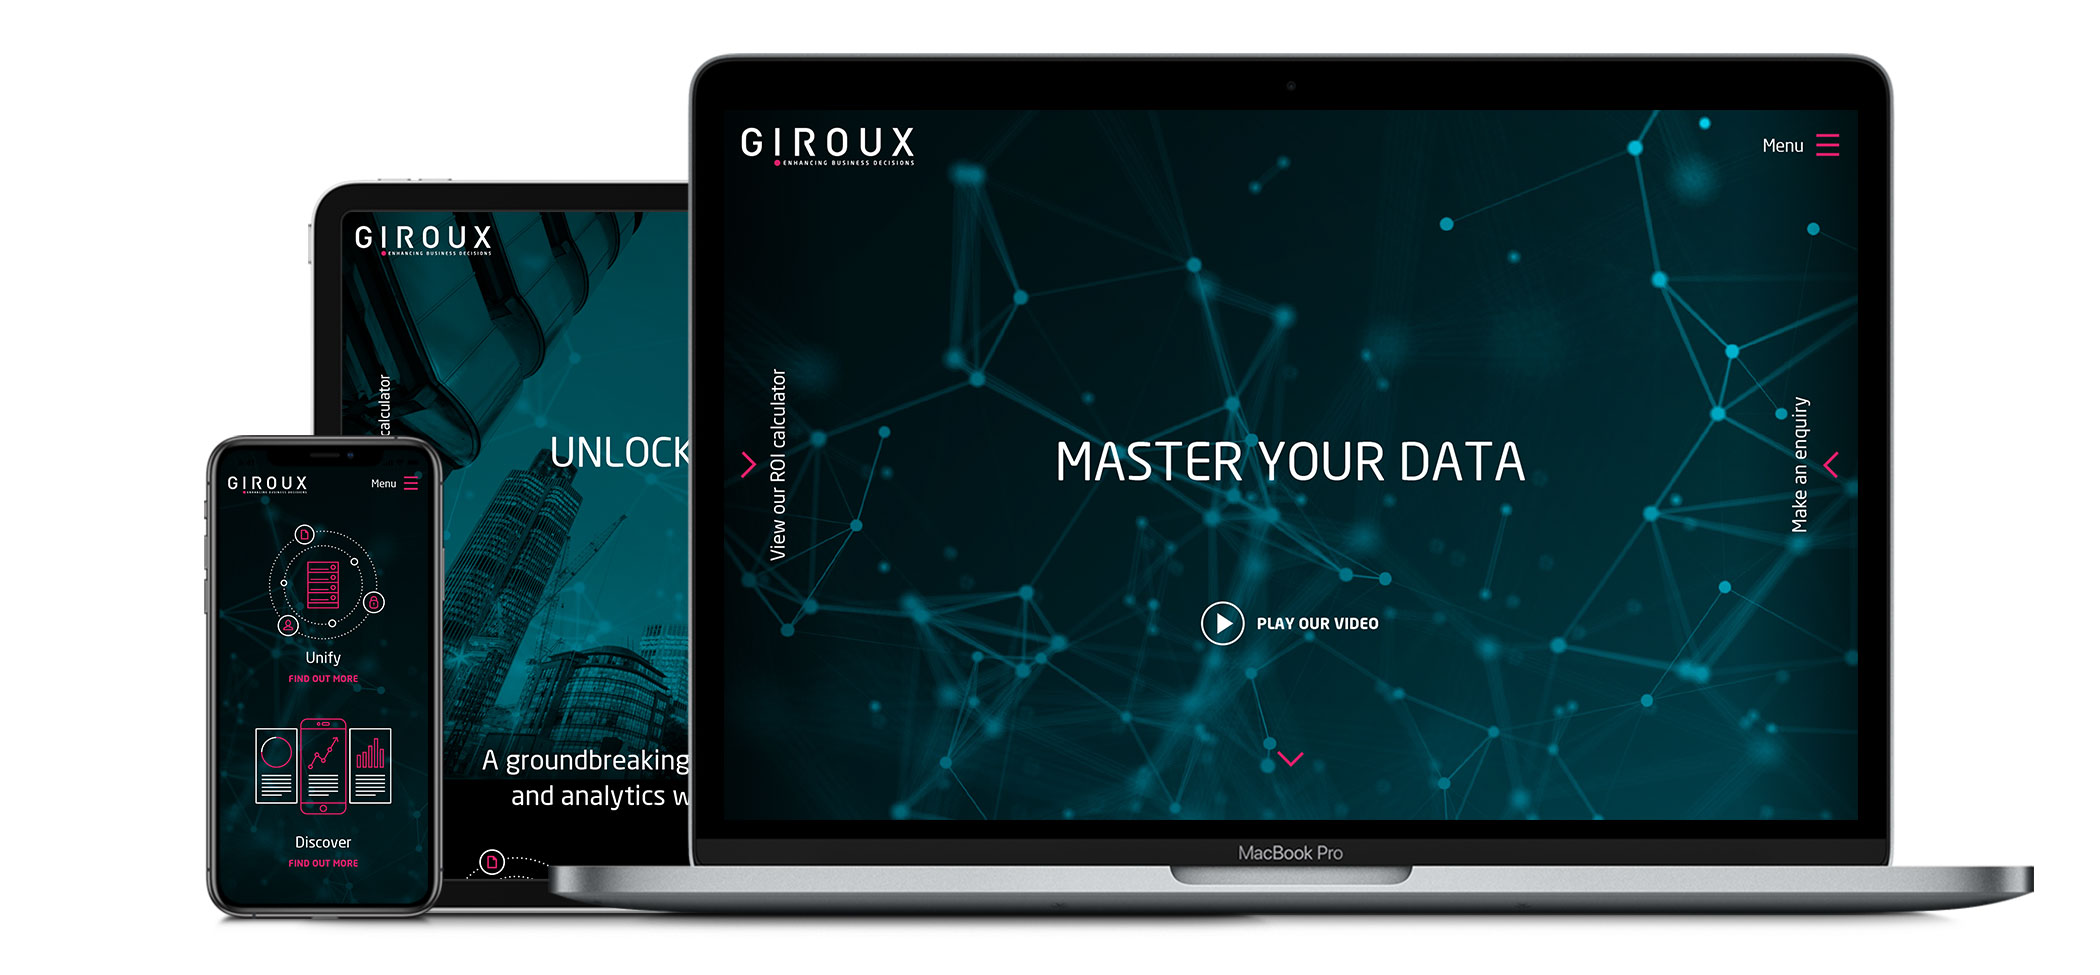 Giroux responsive website design and development